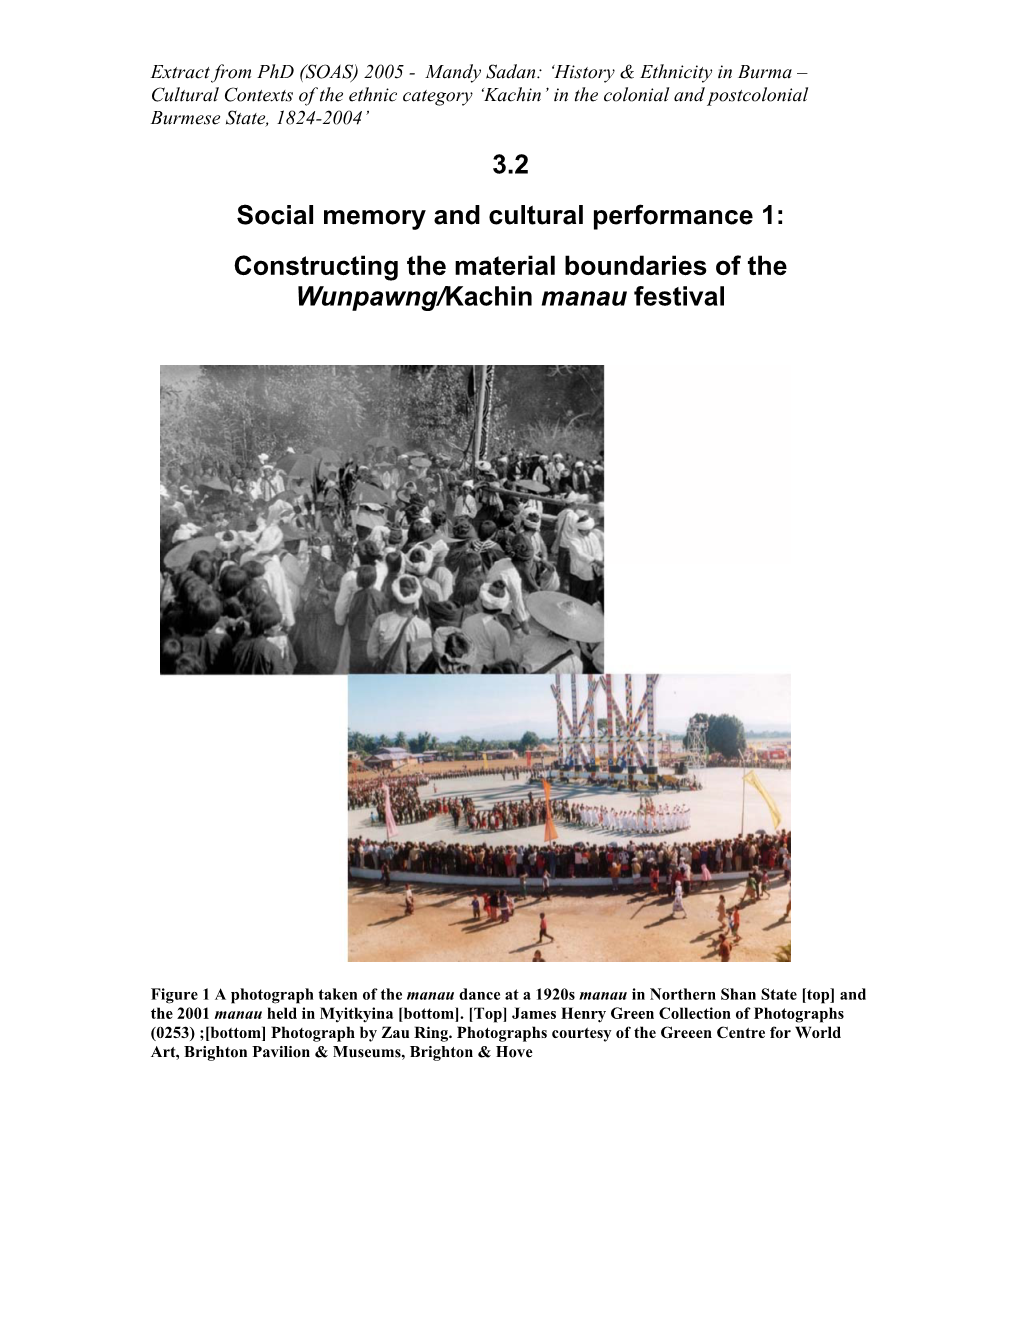 3.2 Social Memory and Cultural Performance 1: Constructing the Material Boundaries of the Wunpawng/Kachin Manau Festival